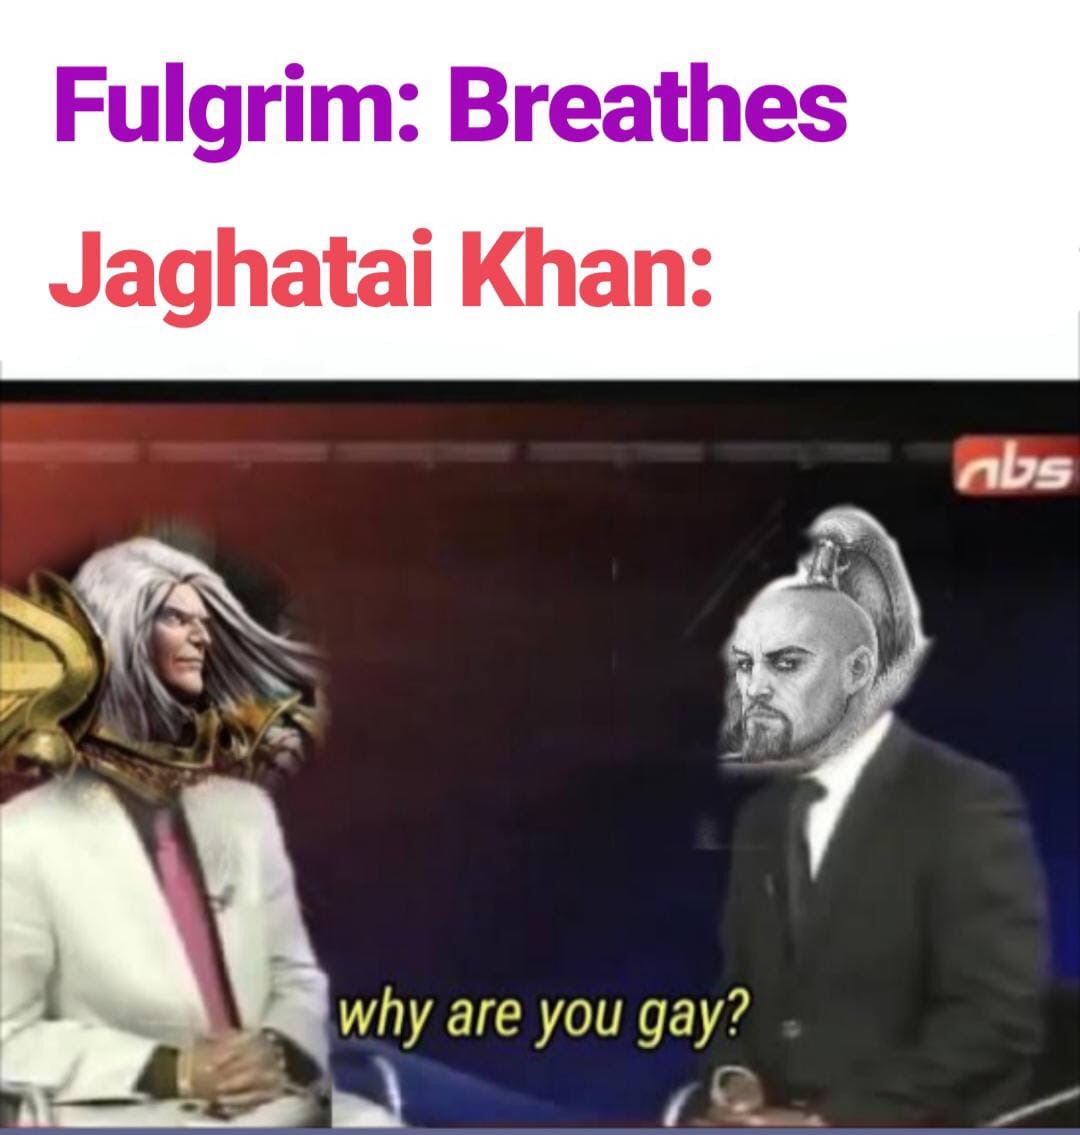 human behavior - Fulgrim Breathes Jaghatai Khan abs why are you gay?